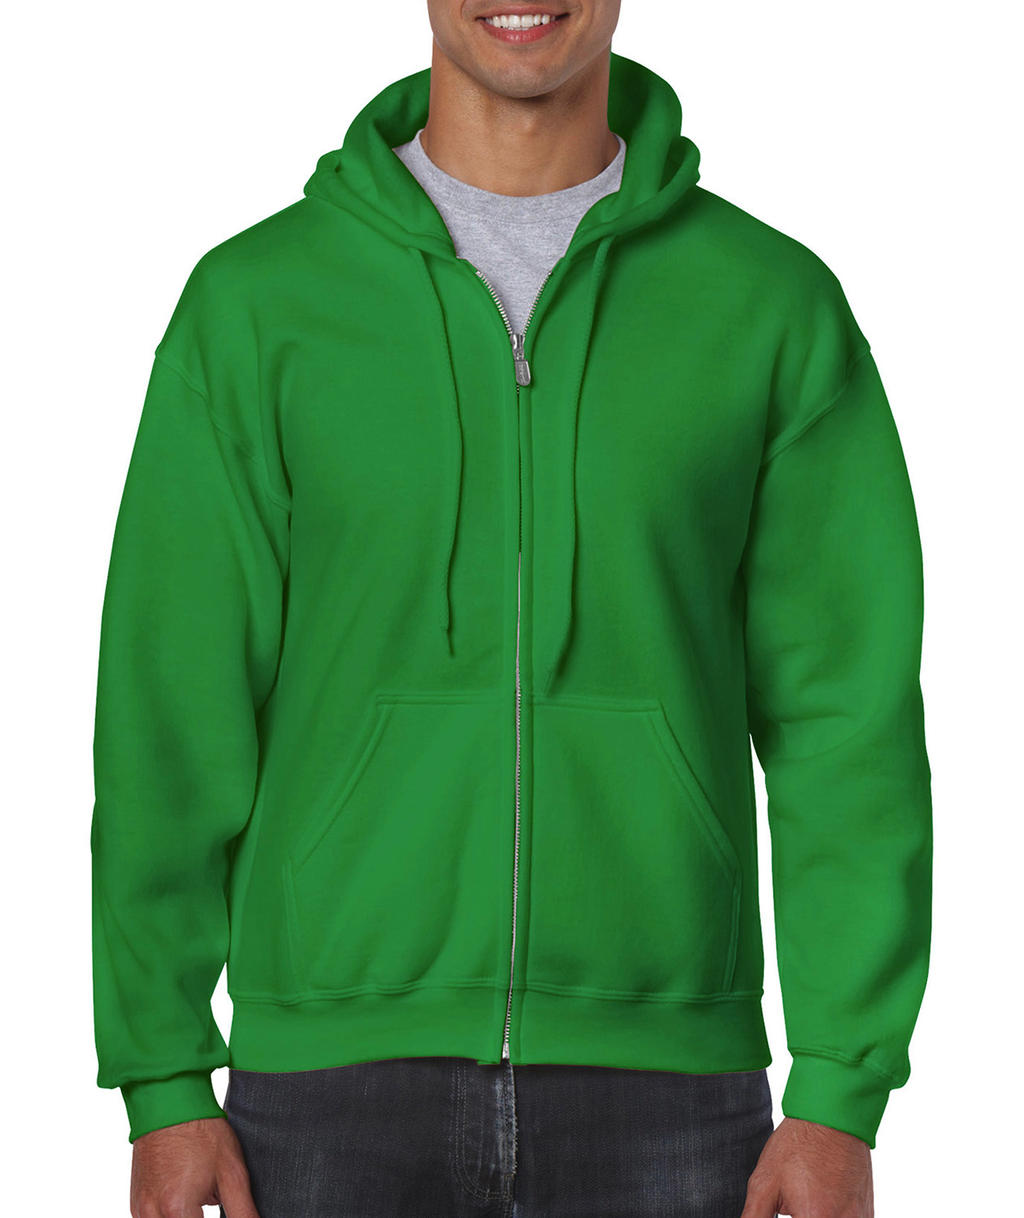  Heavy Blend Adult Full Zip Hooded Sweat in Farbe Irish Green